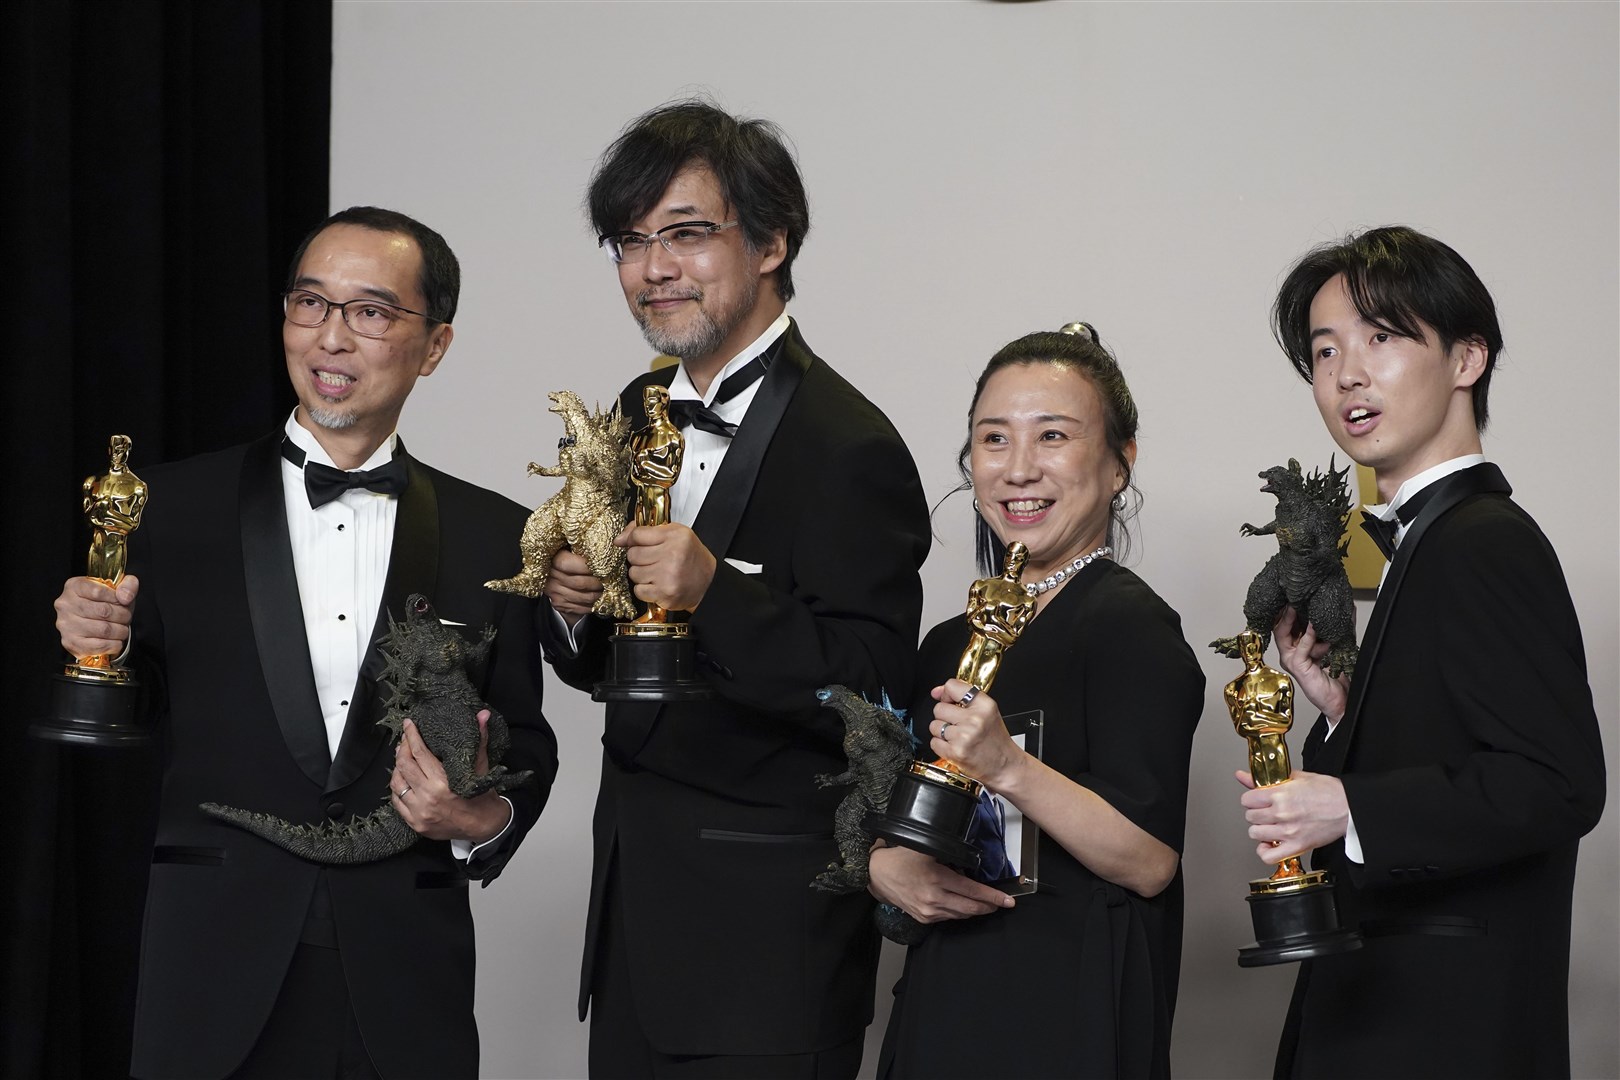 Masaki Takahashi, from left, Takashi Yamazaki, Kiyoko Shibuya, and Tatsuji Nojima (Jordan Strauss/Invision/AP)